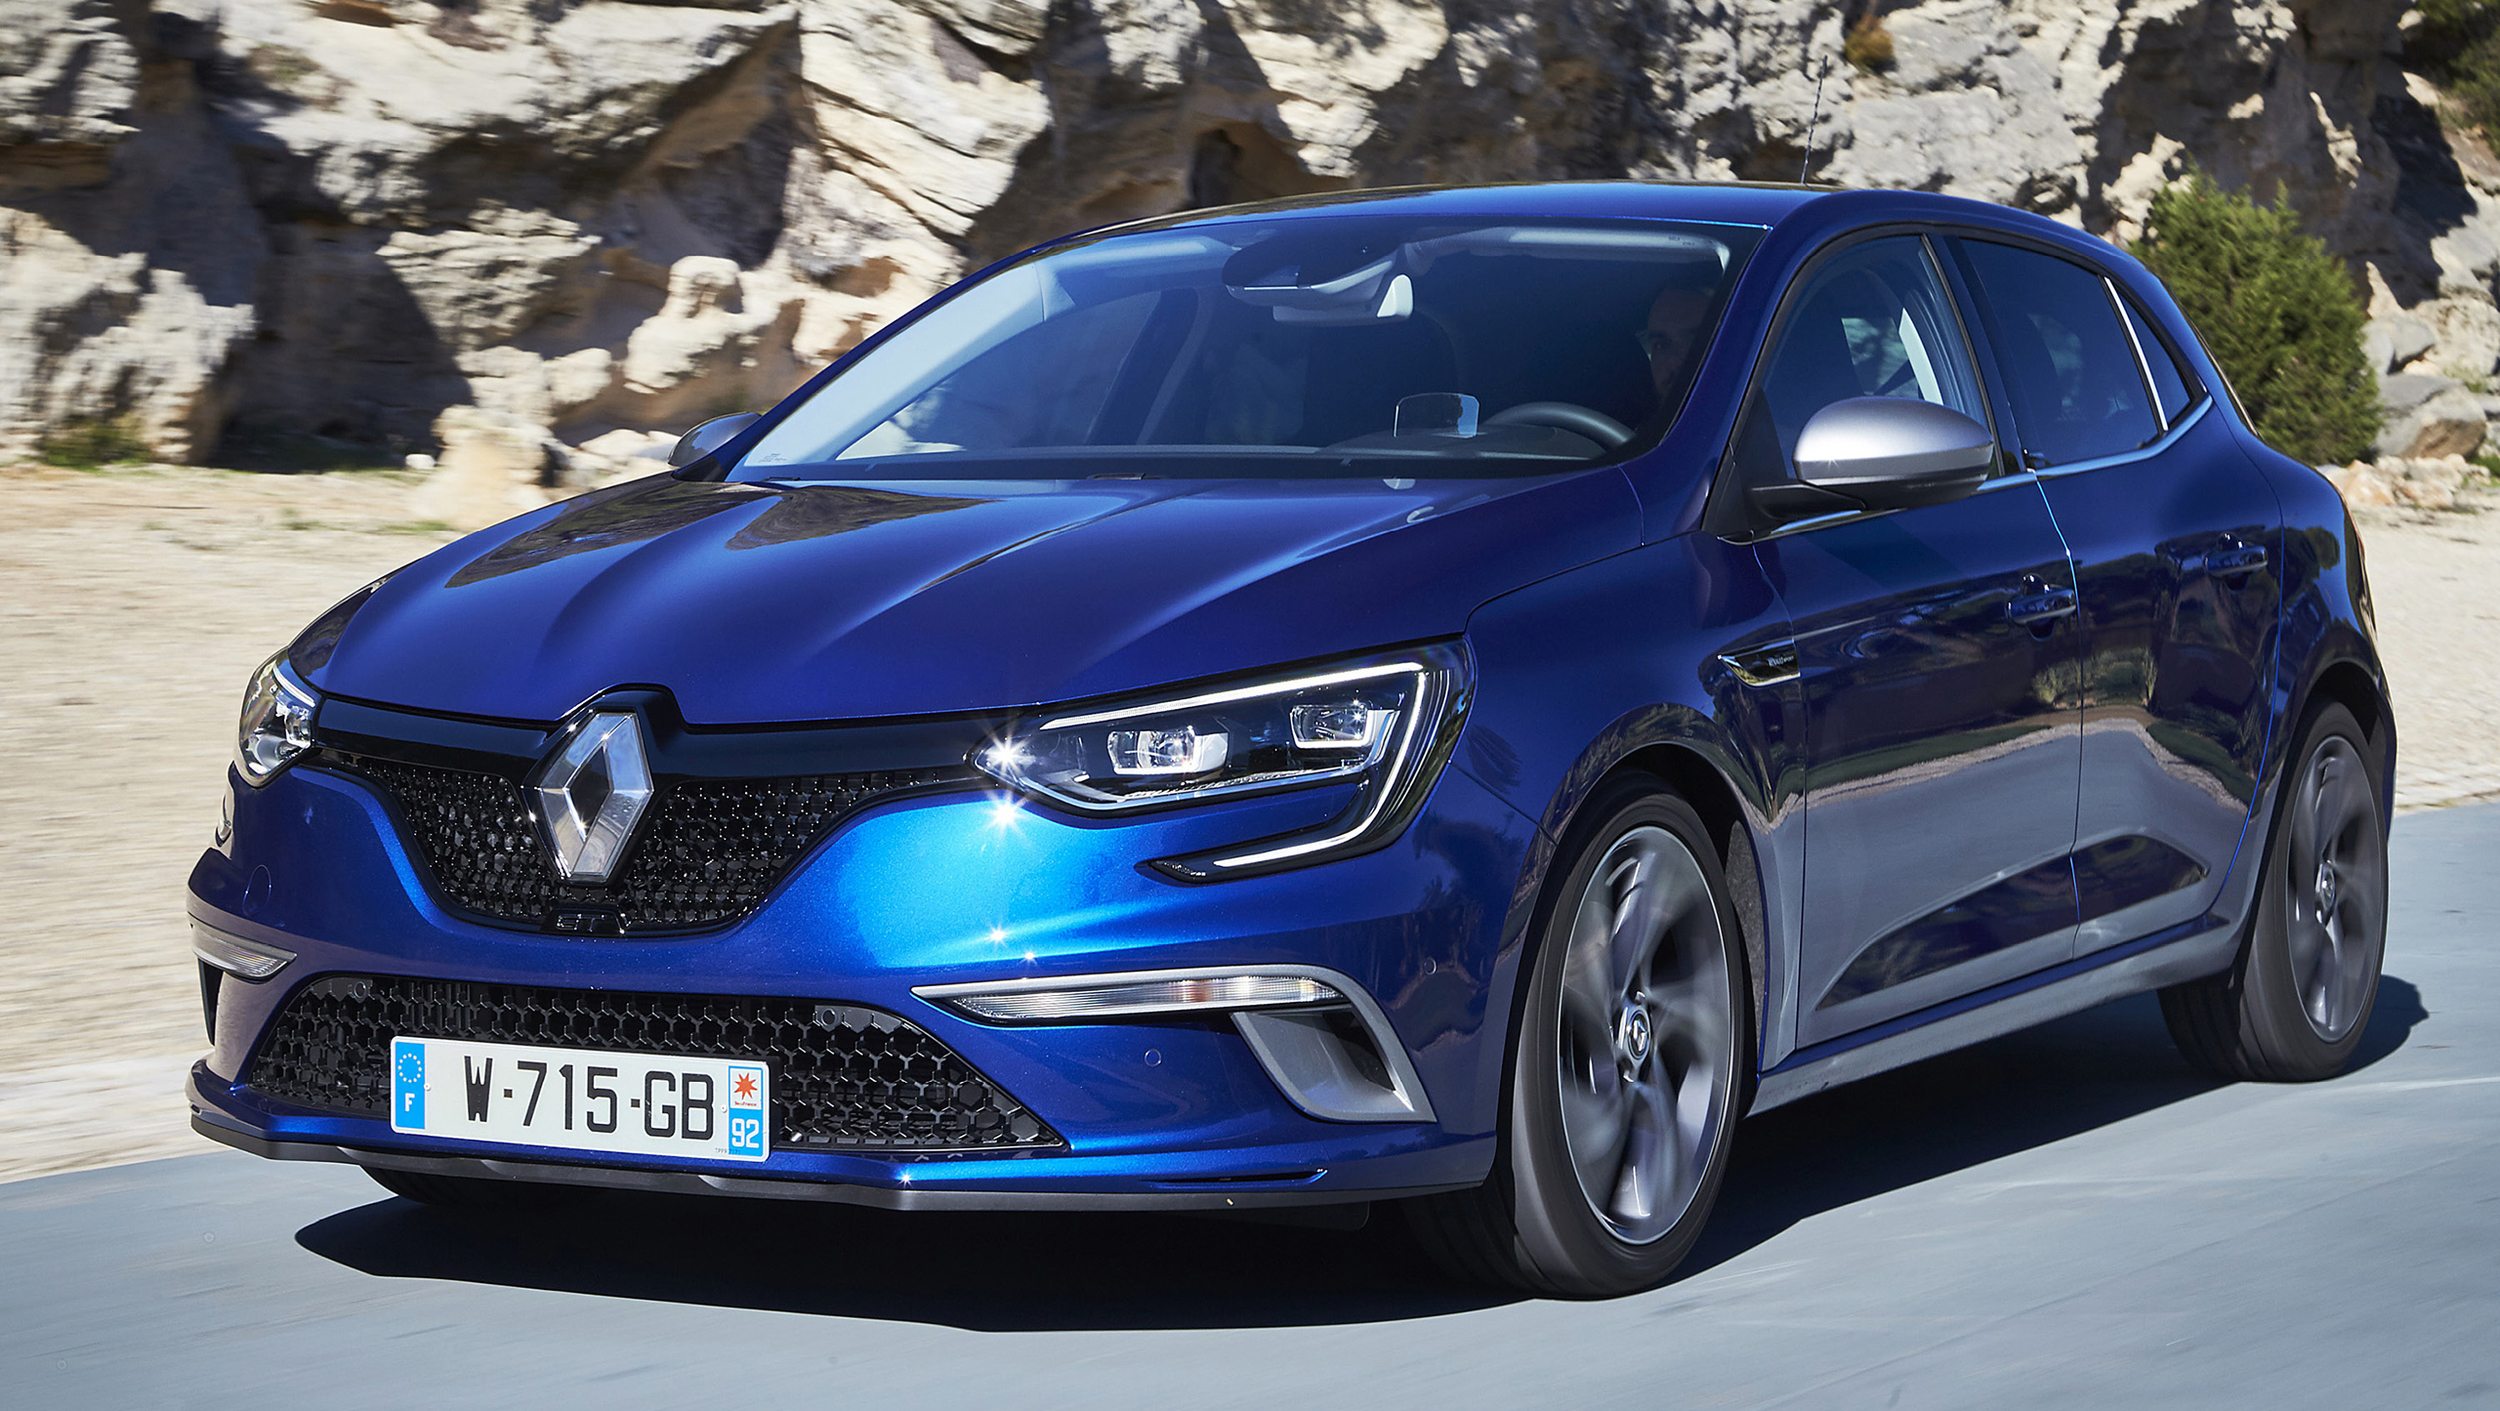 Renault reveals more new Megane details